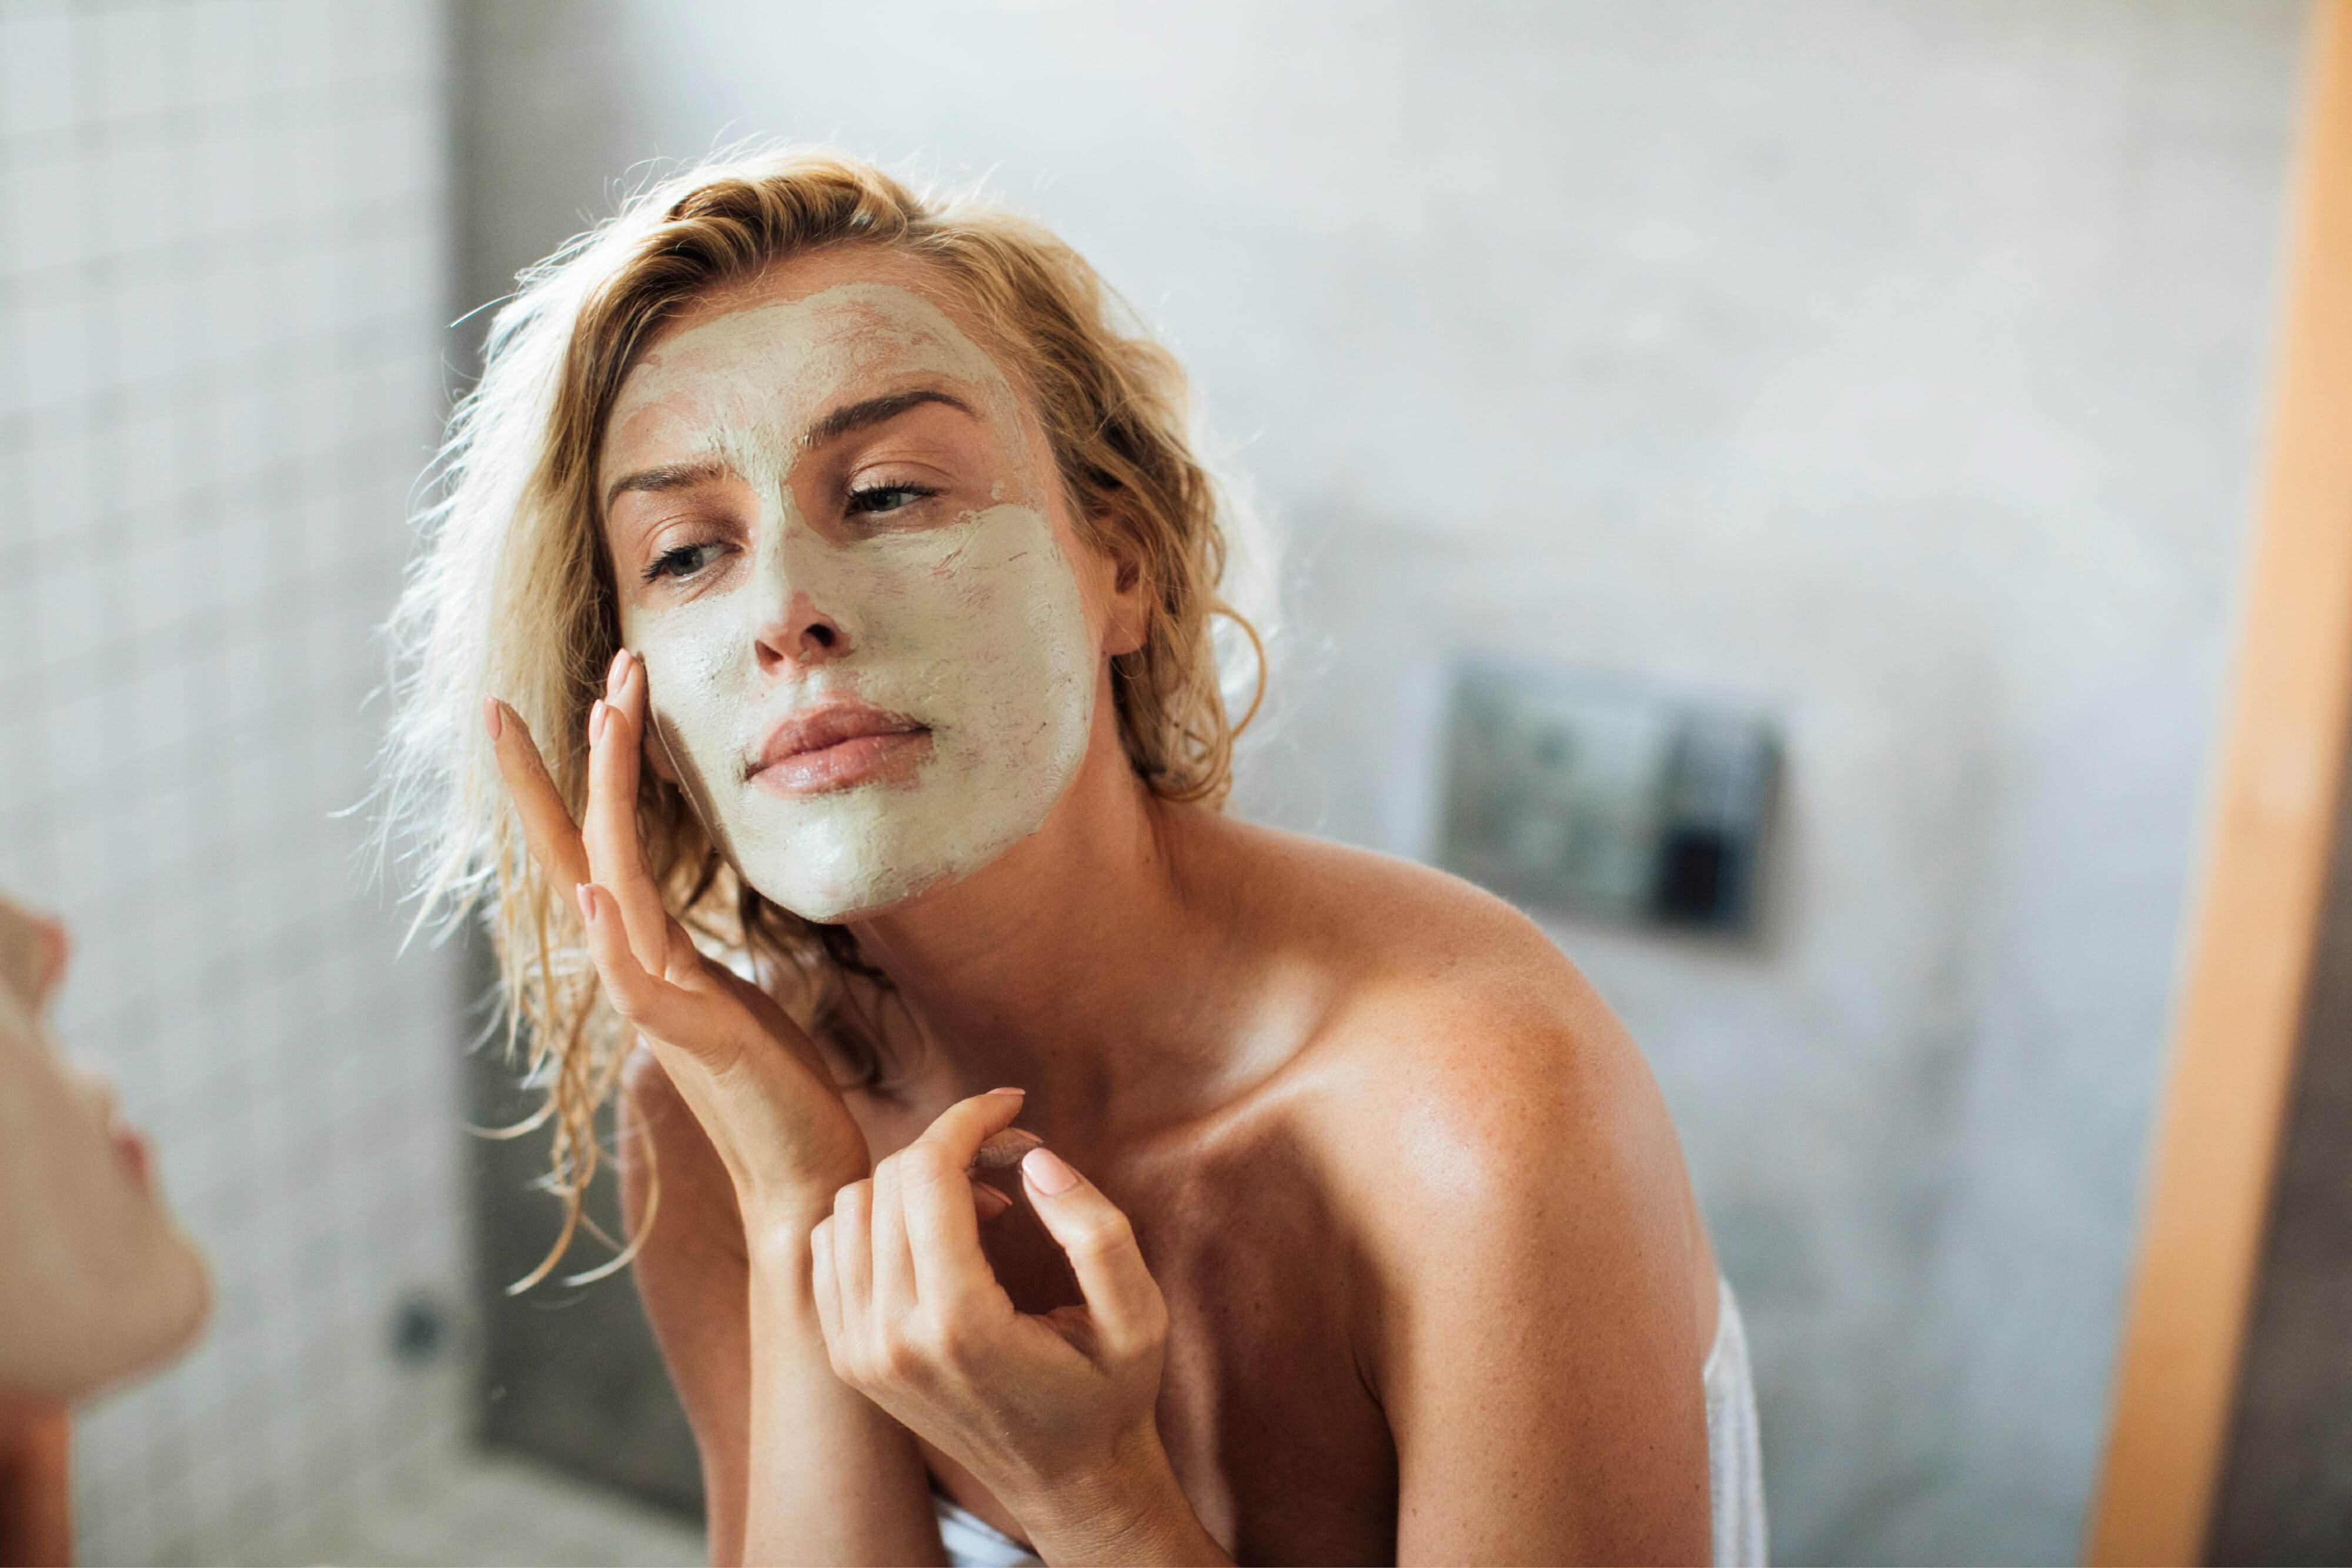 Woman Applying Face Mask